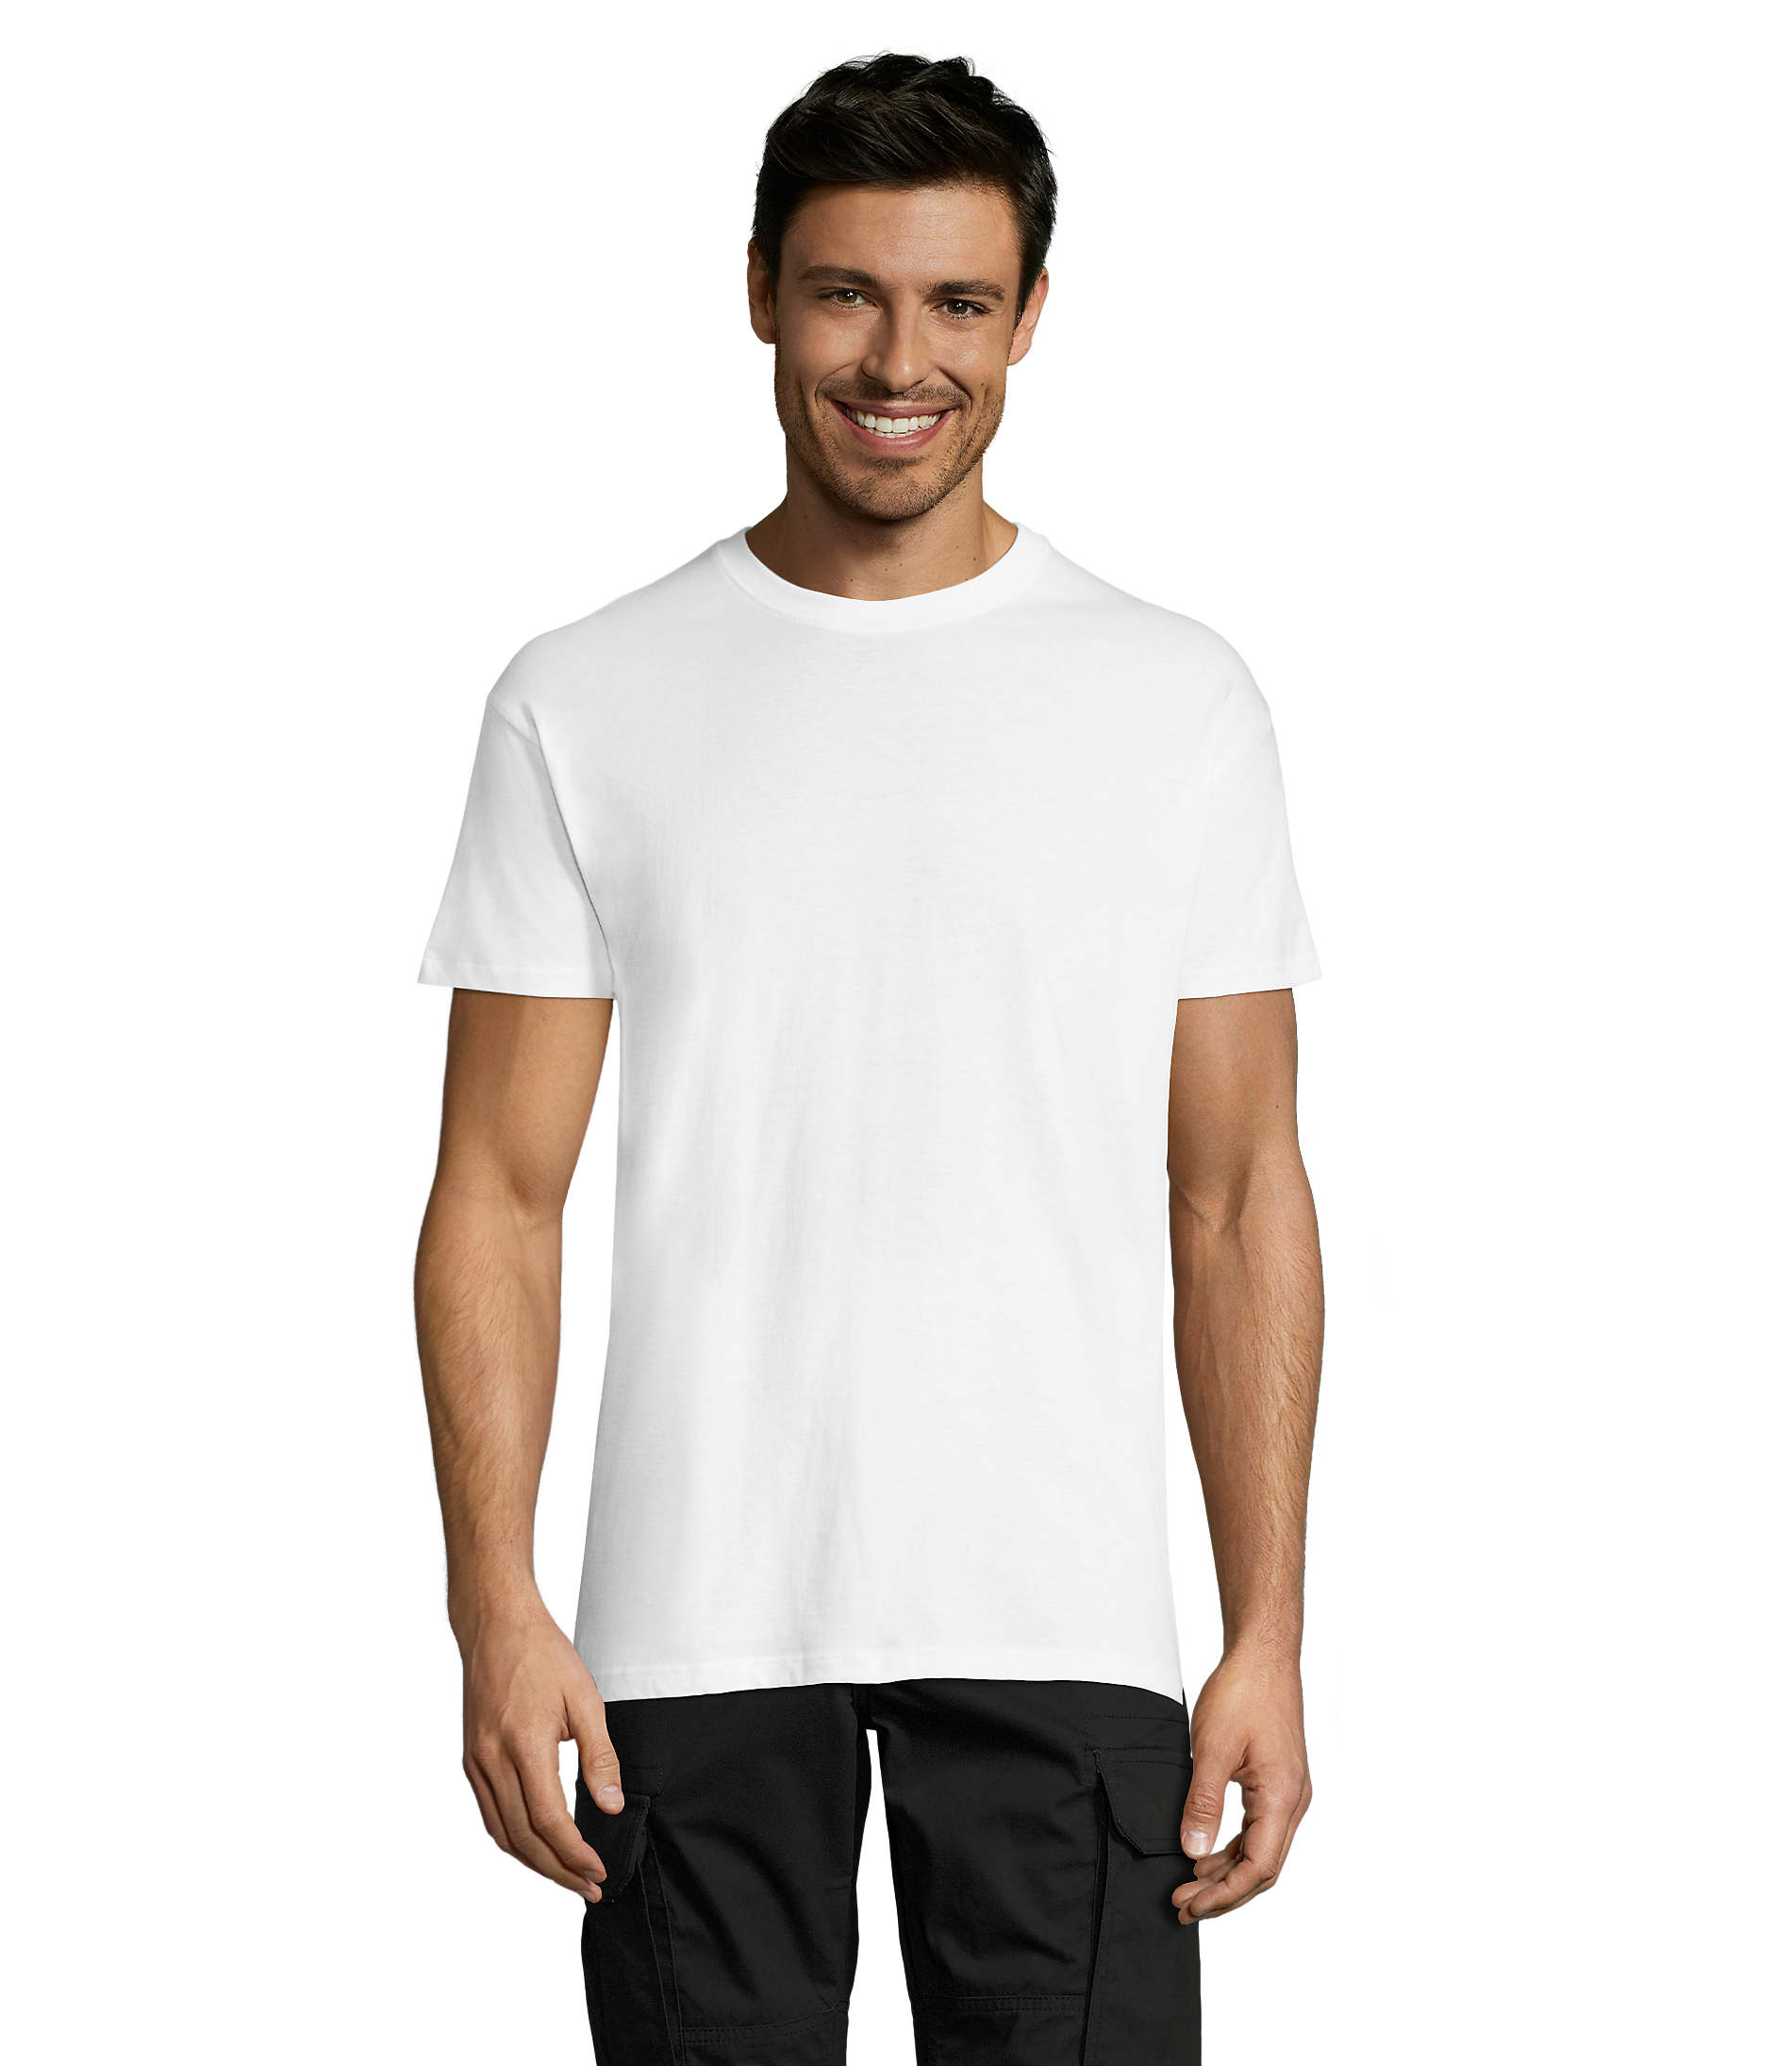 T-shirt Regent by Sol’s (minimum : 10 t-shirts)